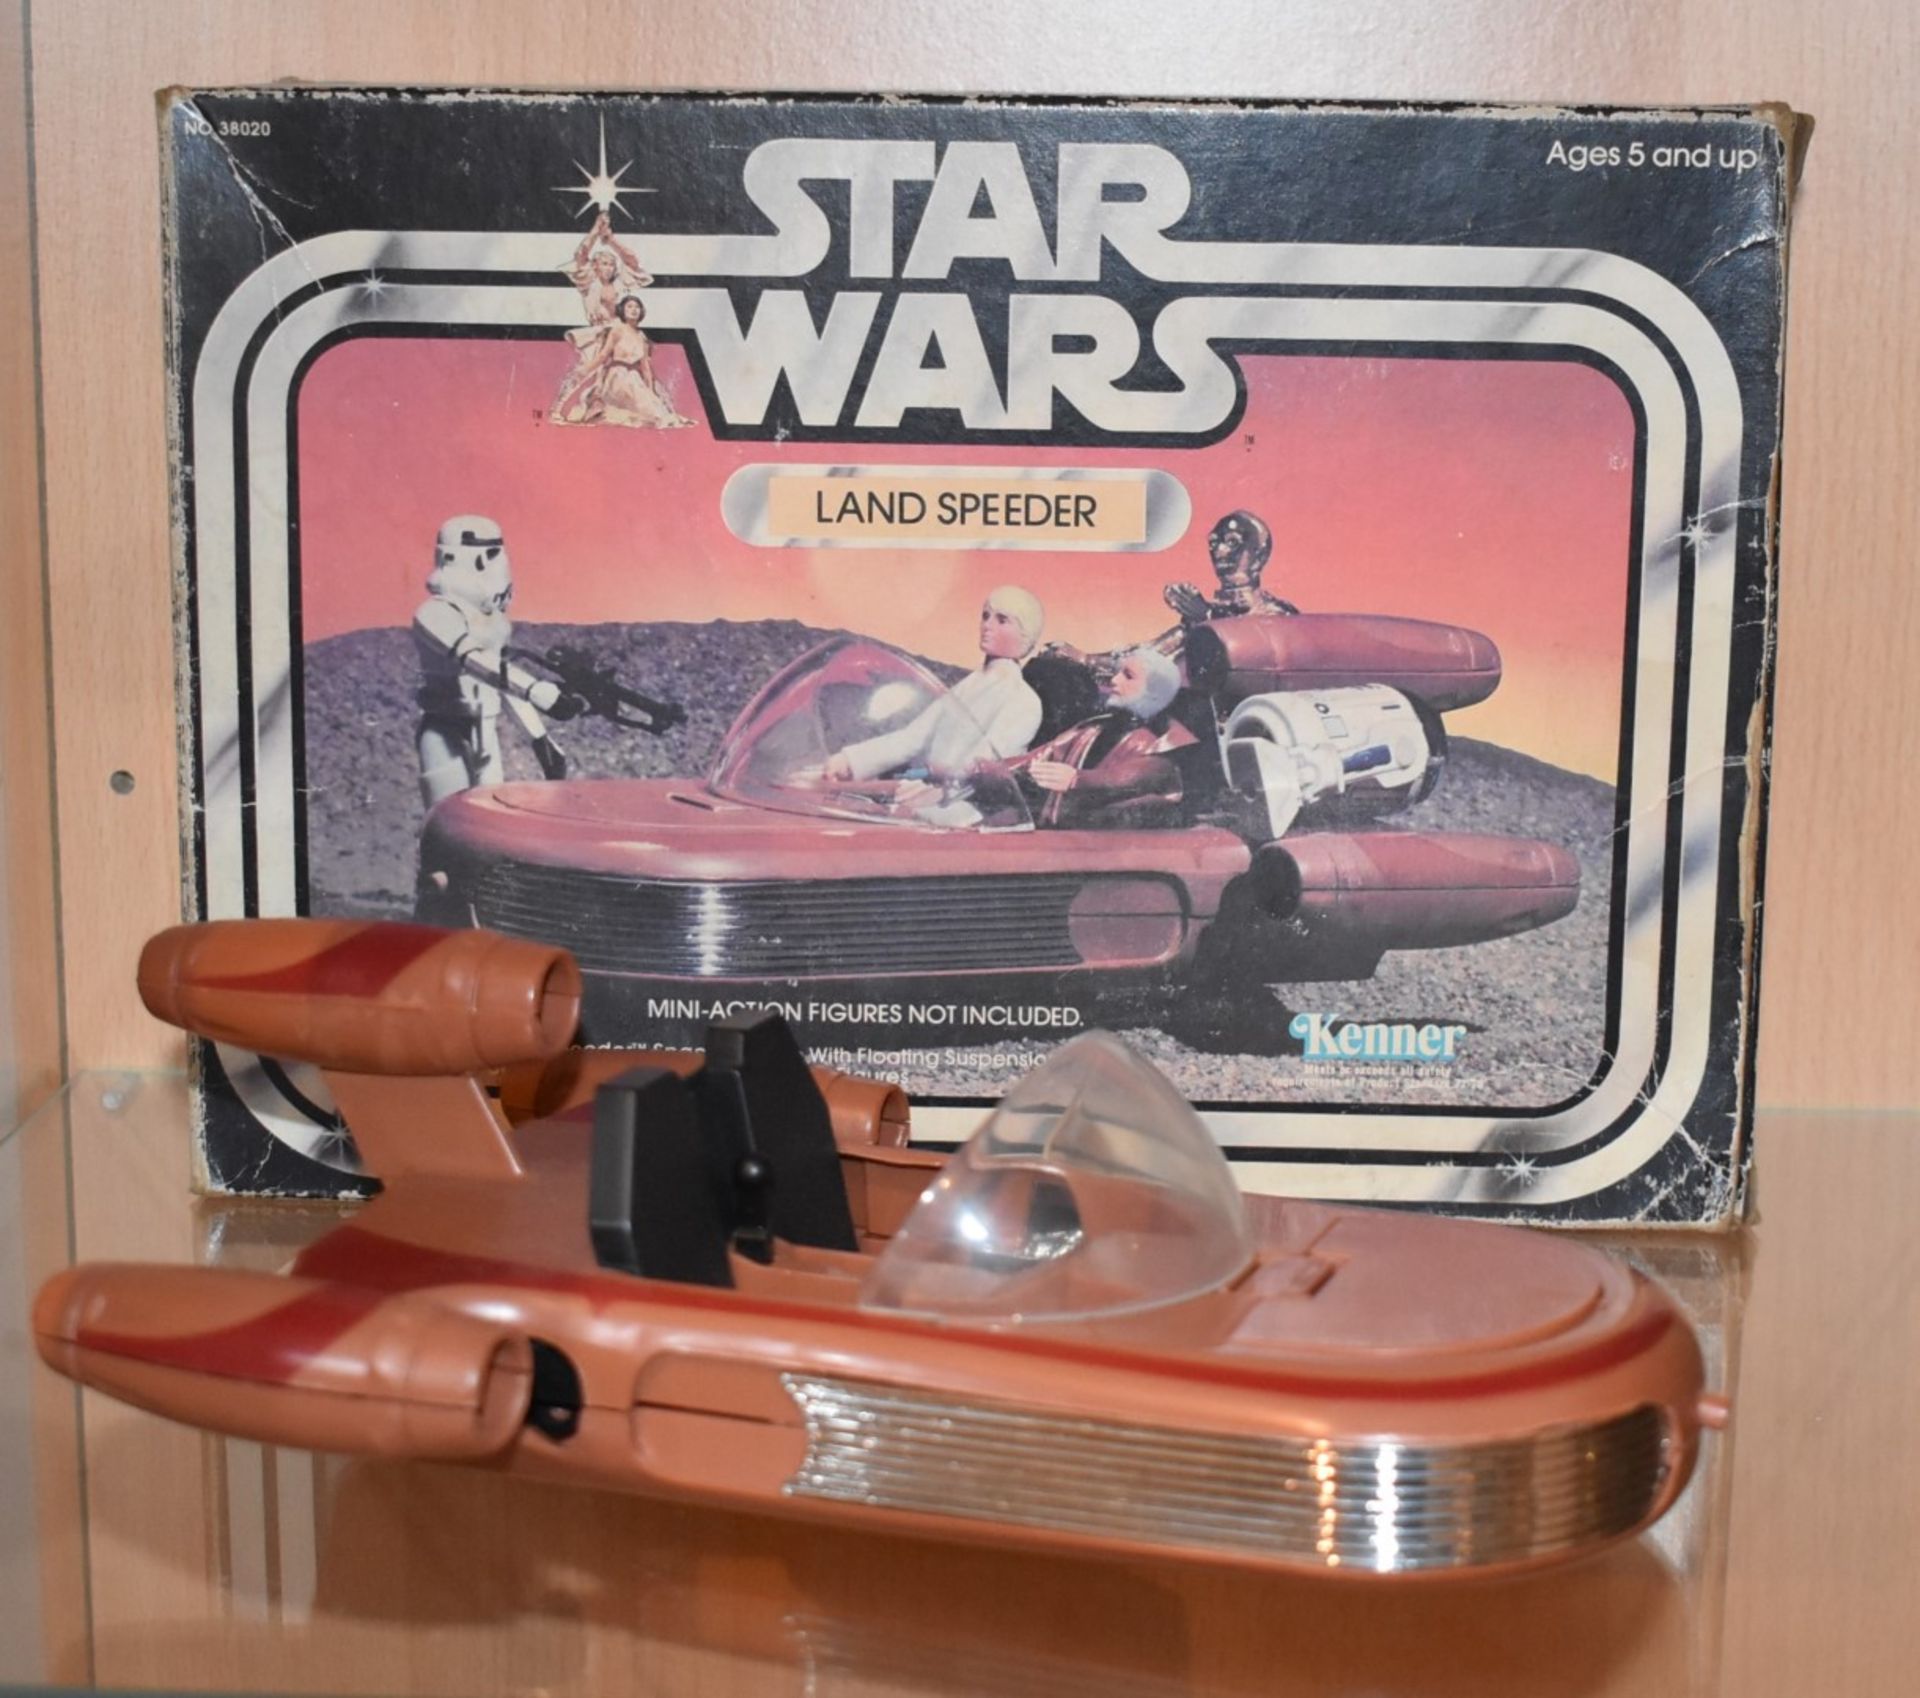 1 x Vintage 1978 Star Wars Land Speeder Toy - Very Good Condition With Original Box - Image 2 of 8